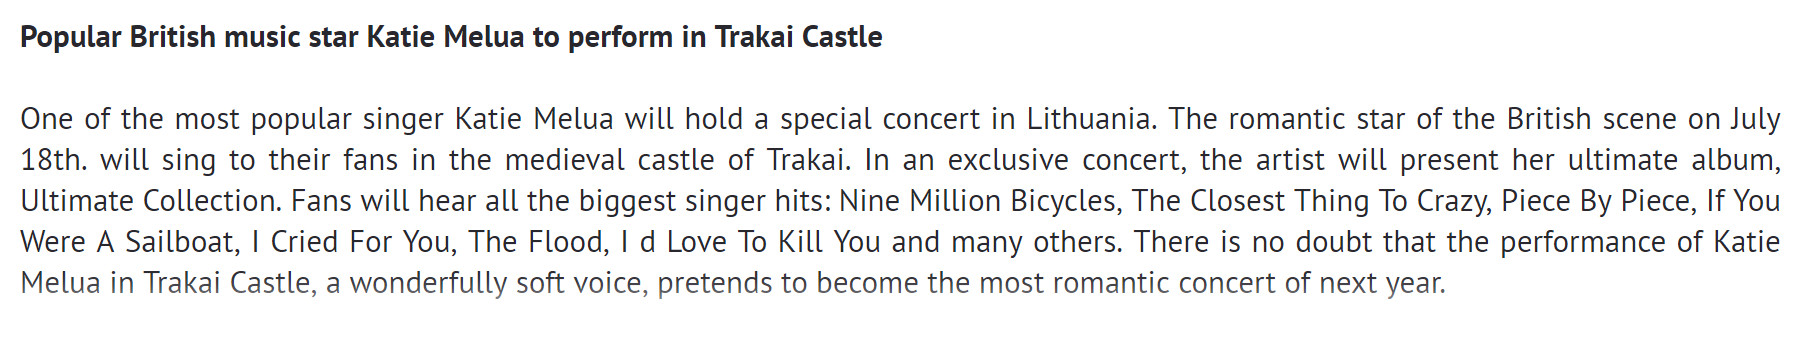 trakai concert description